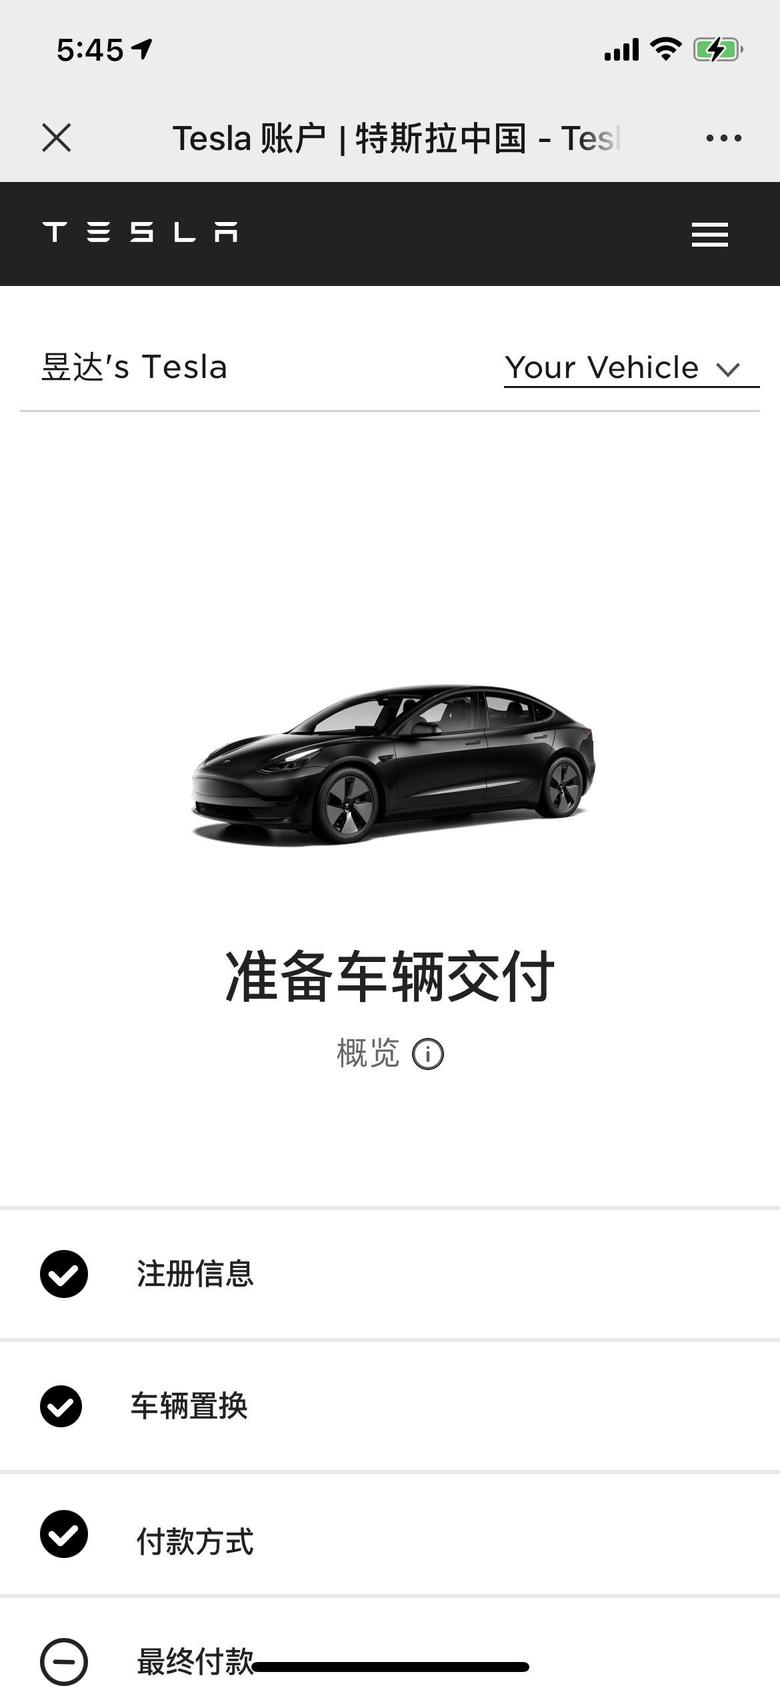 model 3 1月23号下的订单，155，目前还没有消息，不知道北京现在匹配到几号的订单了？